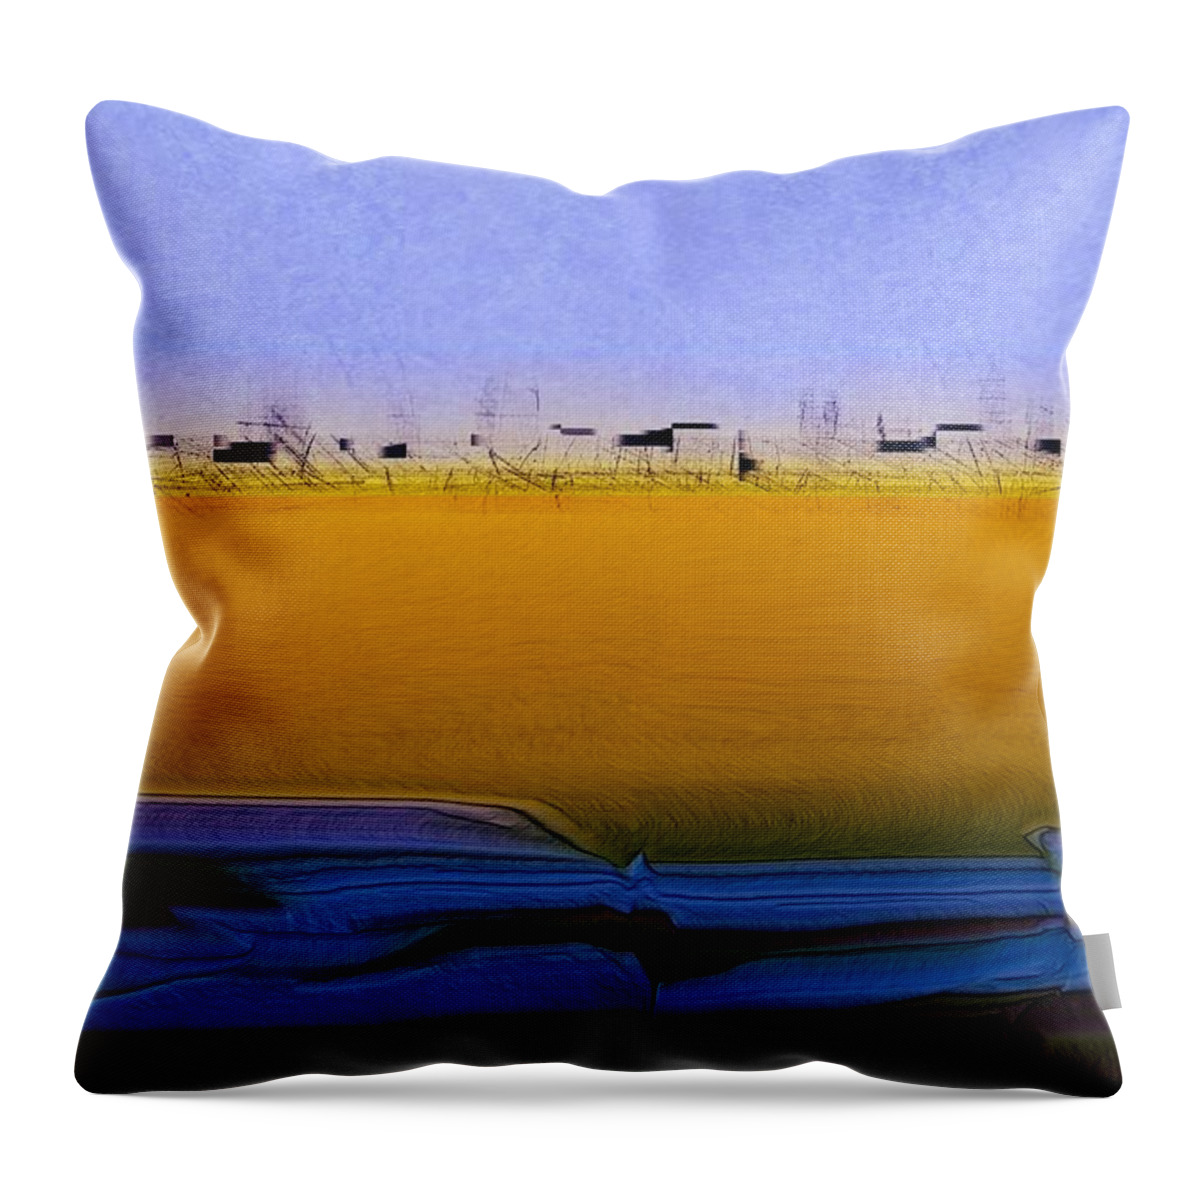 Digital Art Throw Pillow featuring the digital art Digital City Landscape - 2 by Kae Cheatham